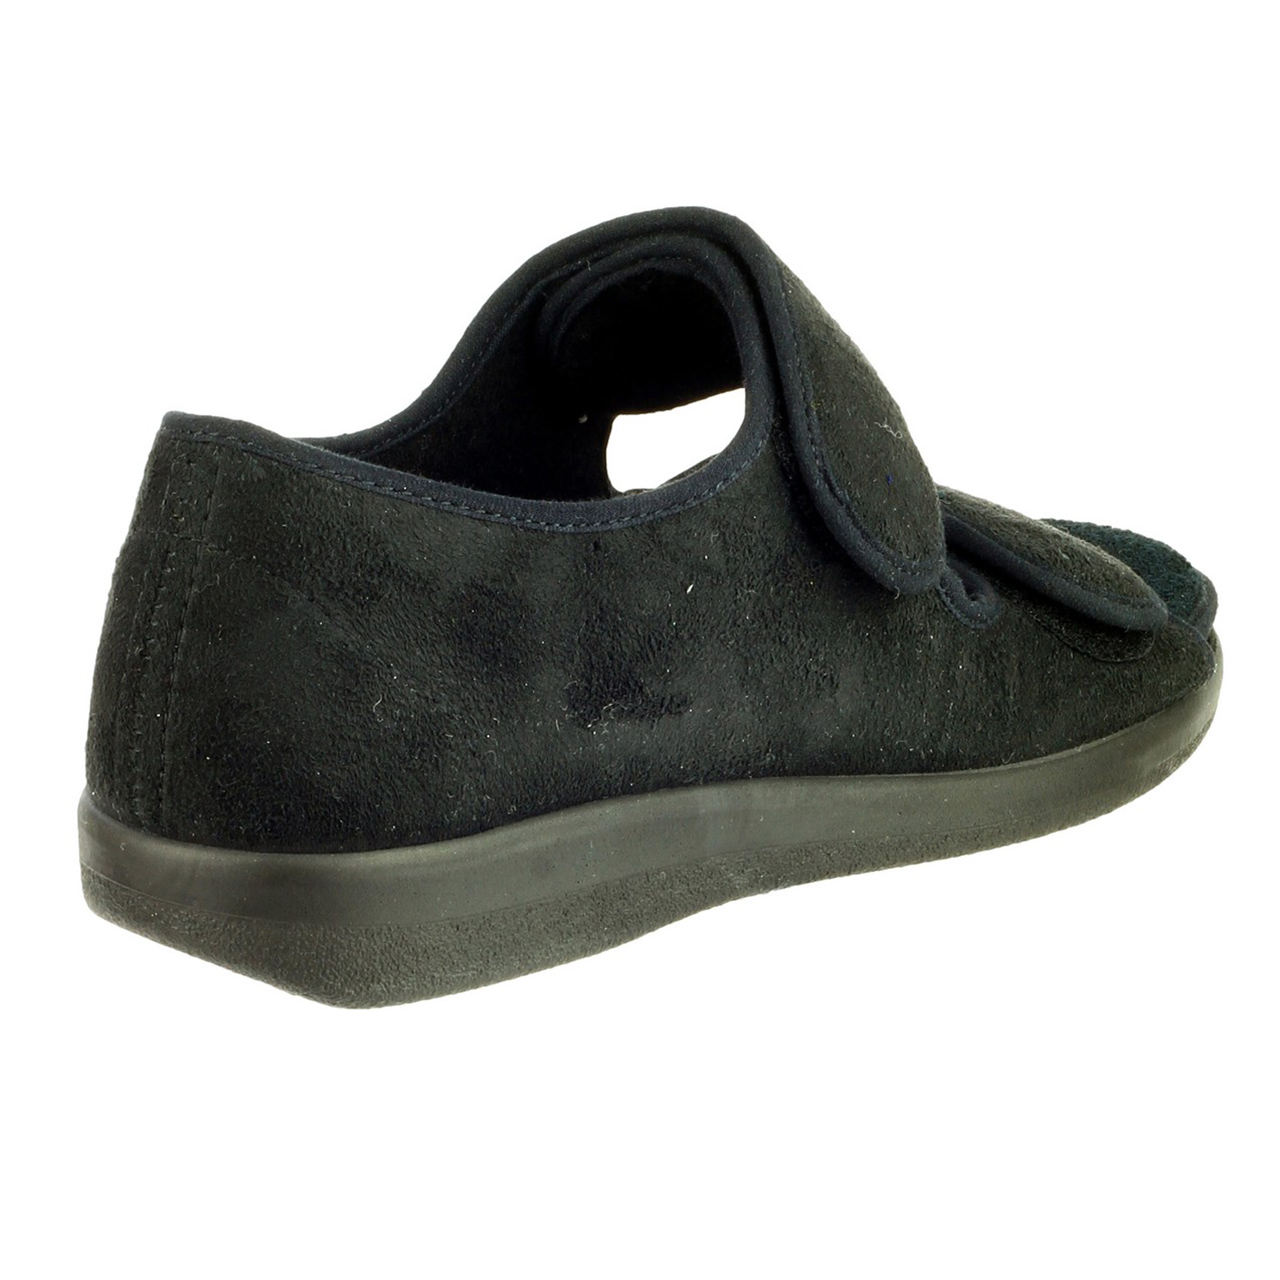 Black | Open-Toed Orthopaedic Shoes | Expert Verdict